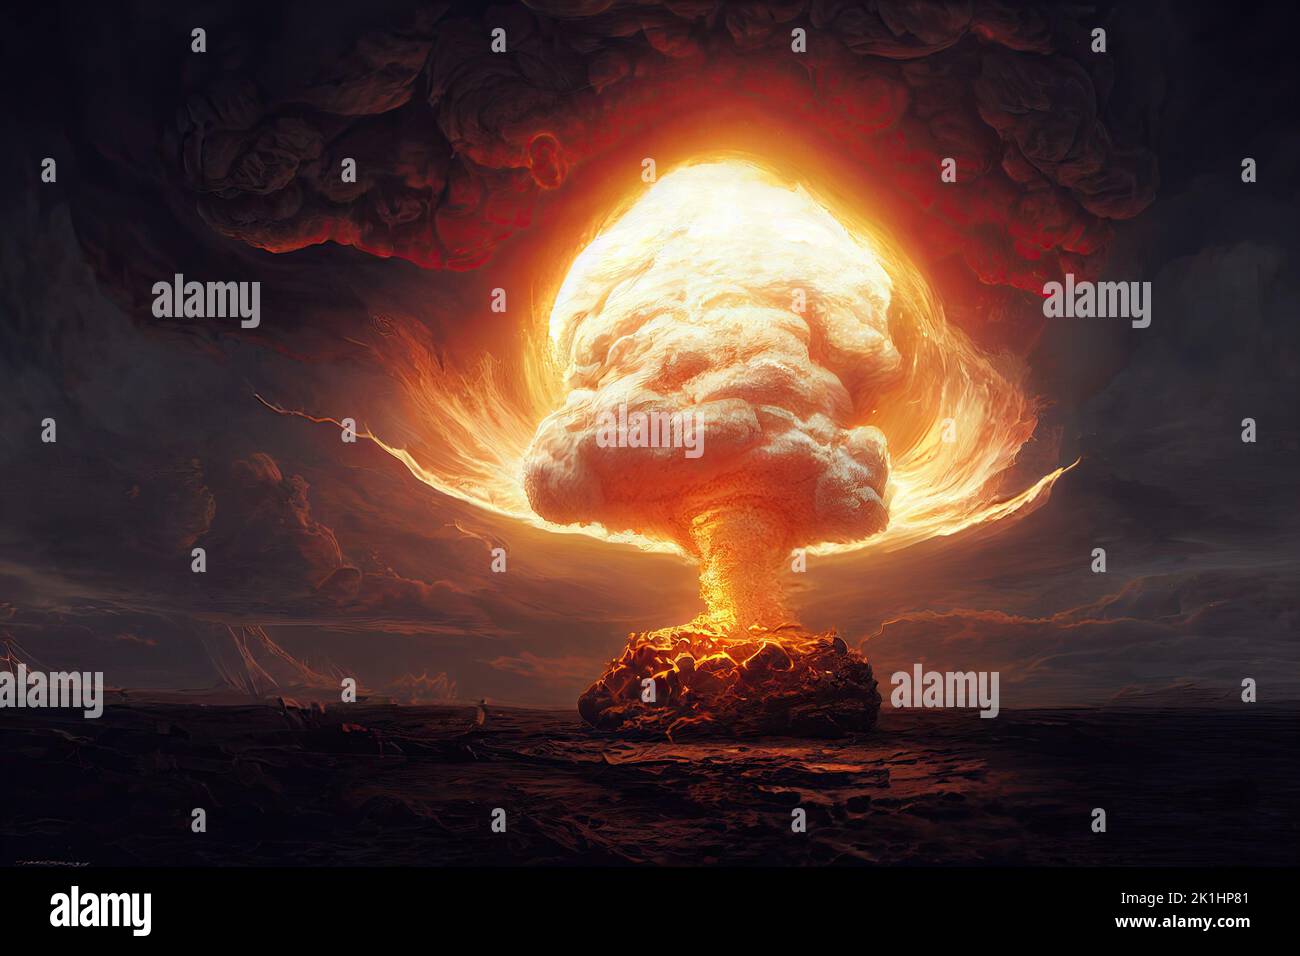 An explosion in a town's skyline produces a nuclear fire mushroom cloud in an apocalyptic war. Nuclear explosion of atomic bomb in a nuclear war. 3D Stock Photo